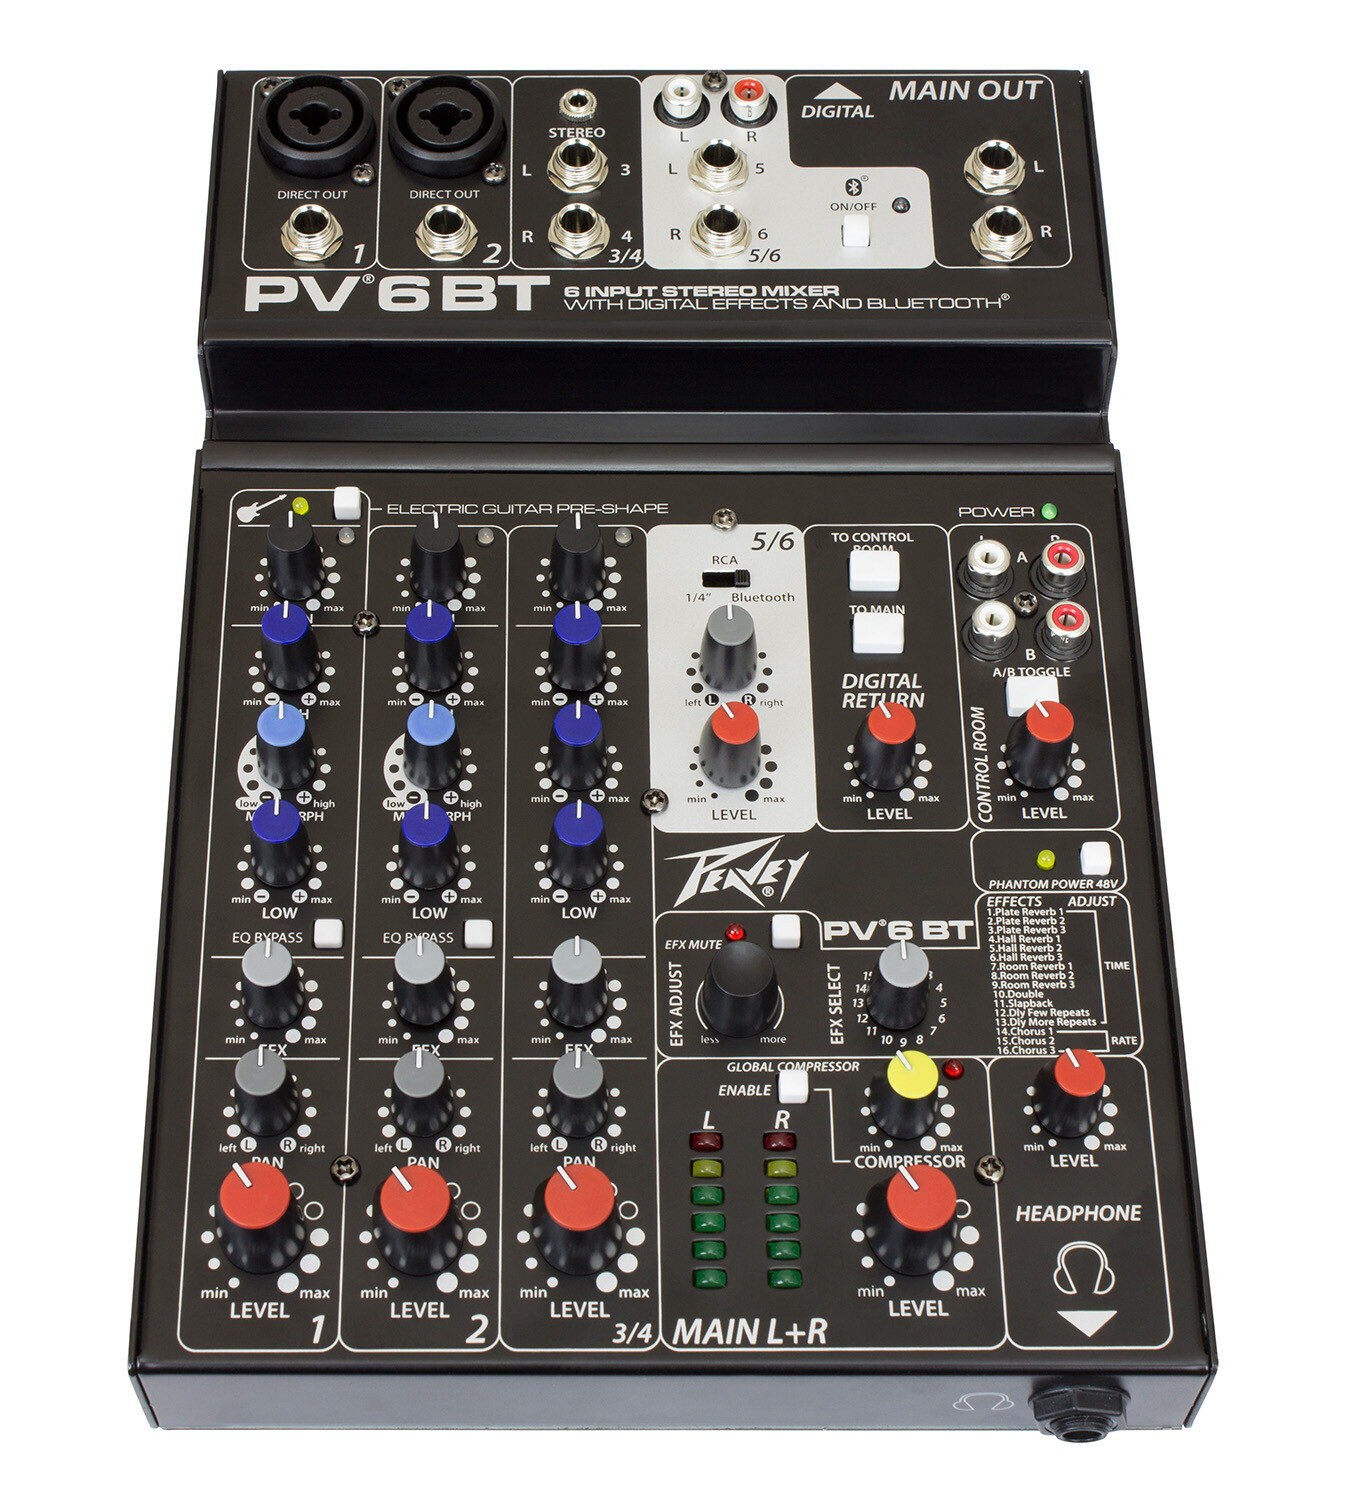 Peavey PV6BT 6 Input Stereo Mixer